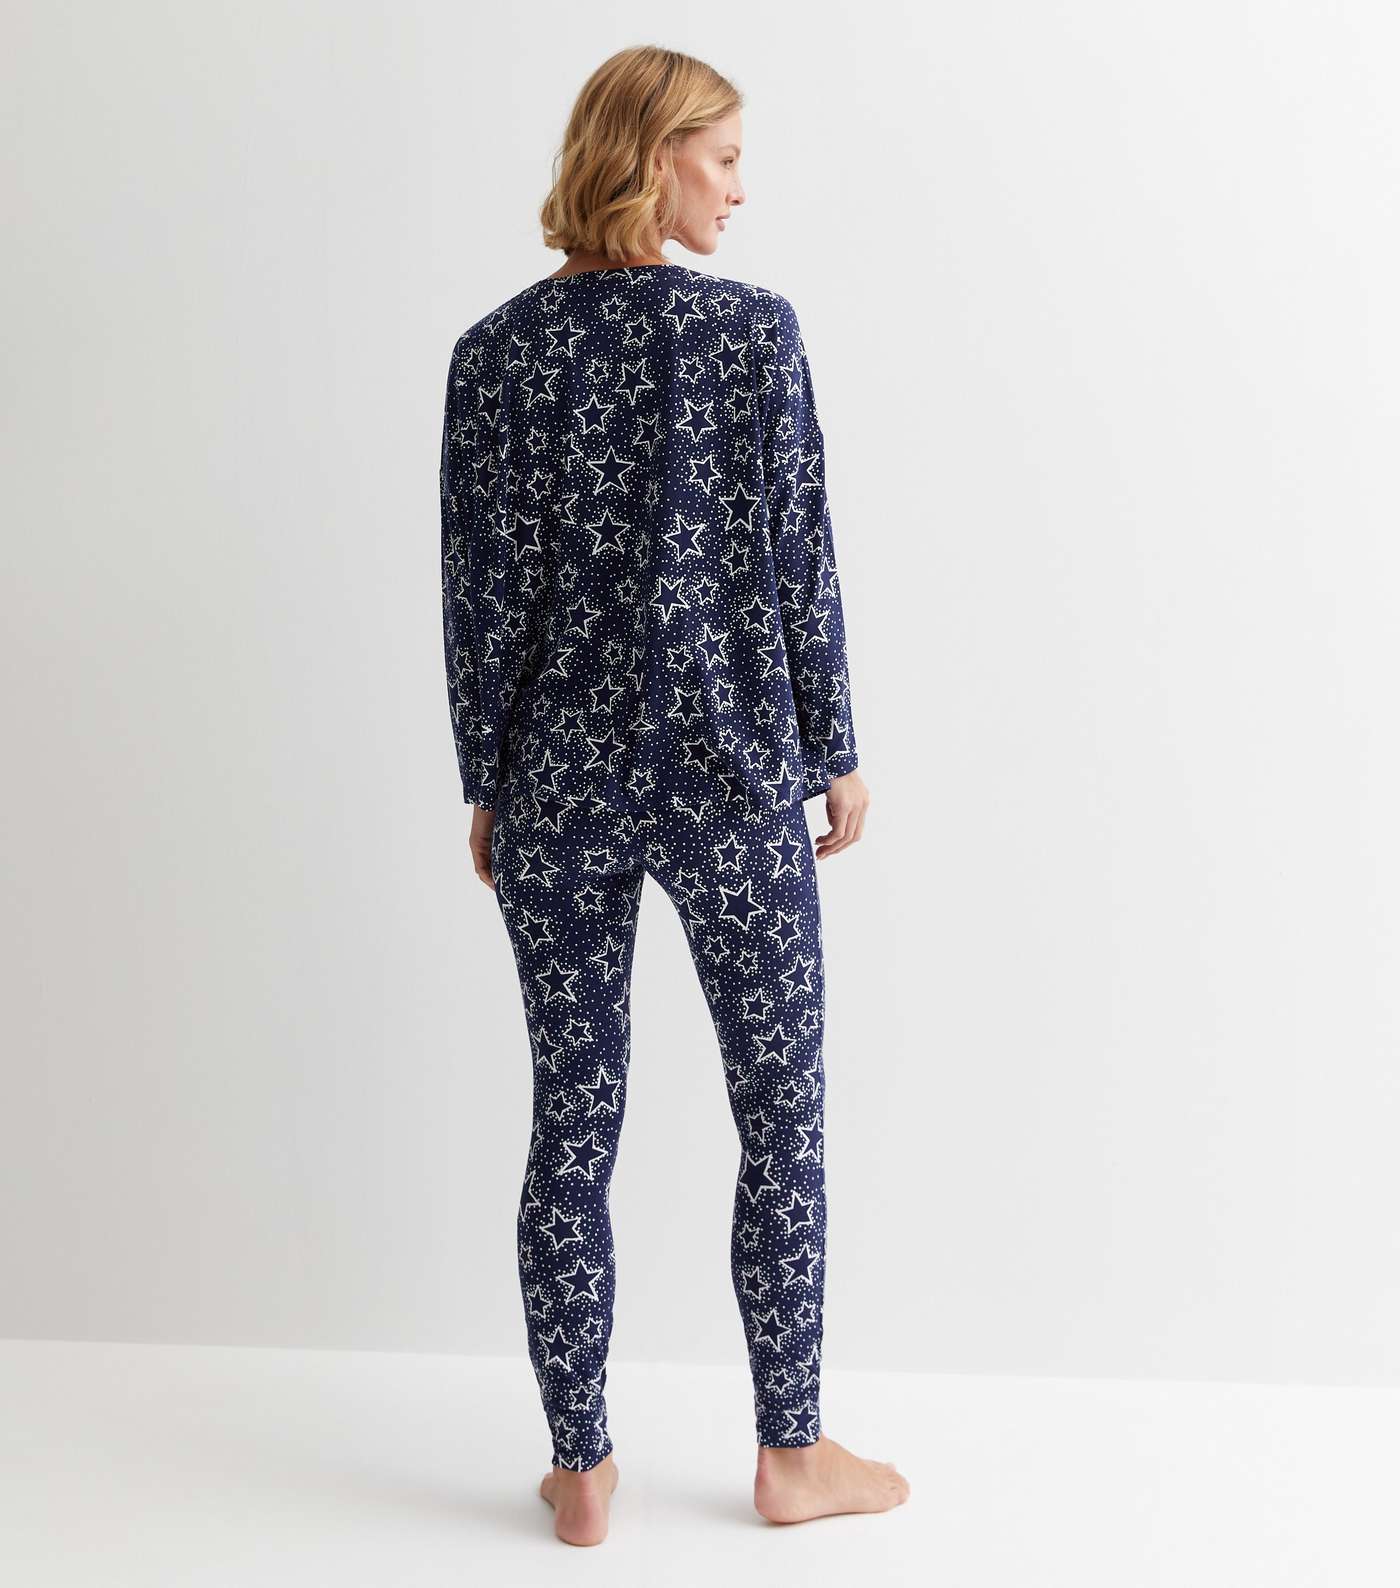 Maternity Navy Soft Touch Legging Pyjama Set with Fairisle Print Image 4